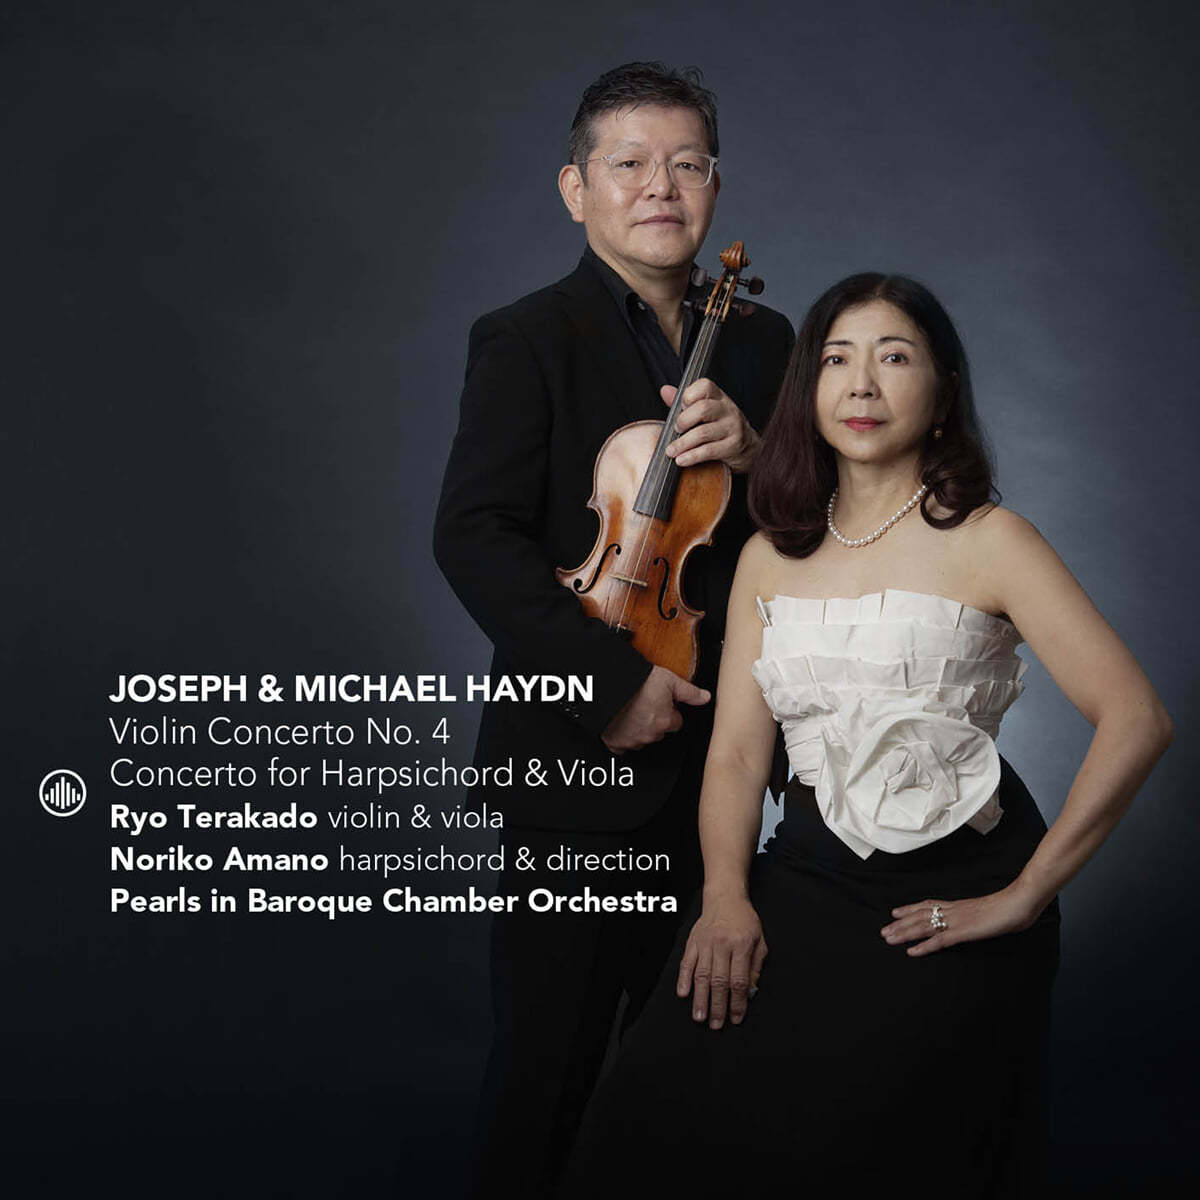 Ryo Terakado 요제프 하이든: 바이올린 협주곡 4번 G장조, 미하엘 하이든: 하프시코드와 비올라를 위한 협주곡 (Joseph Haydn: Violin Concerto No.4, Michael Haydn: Concerto for Harpsichord & Viola)